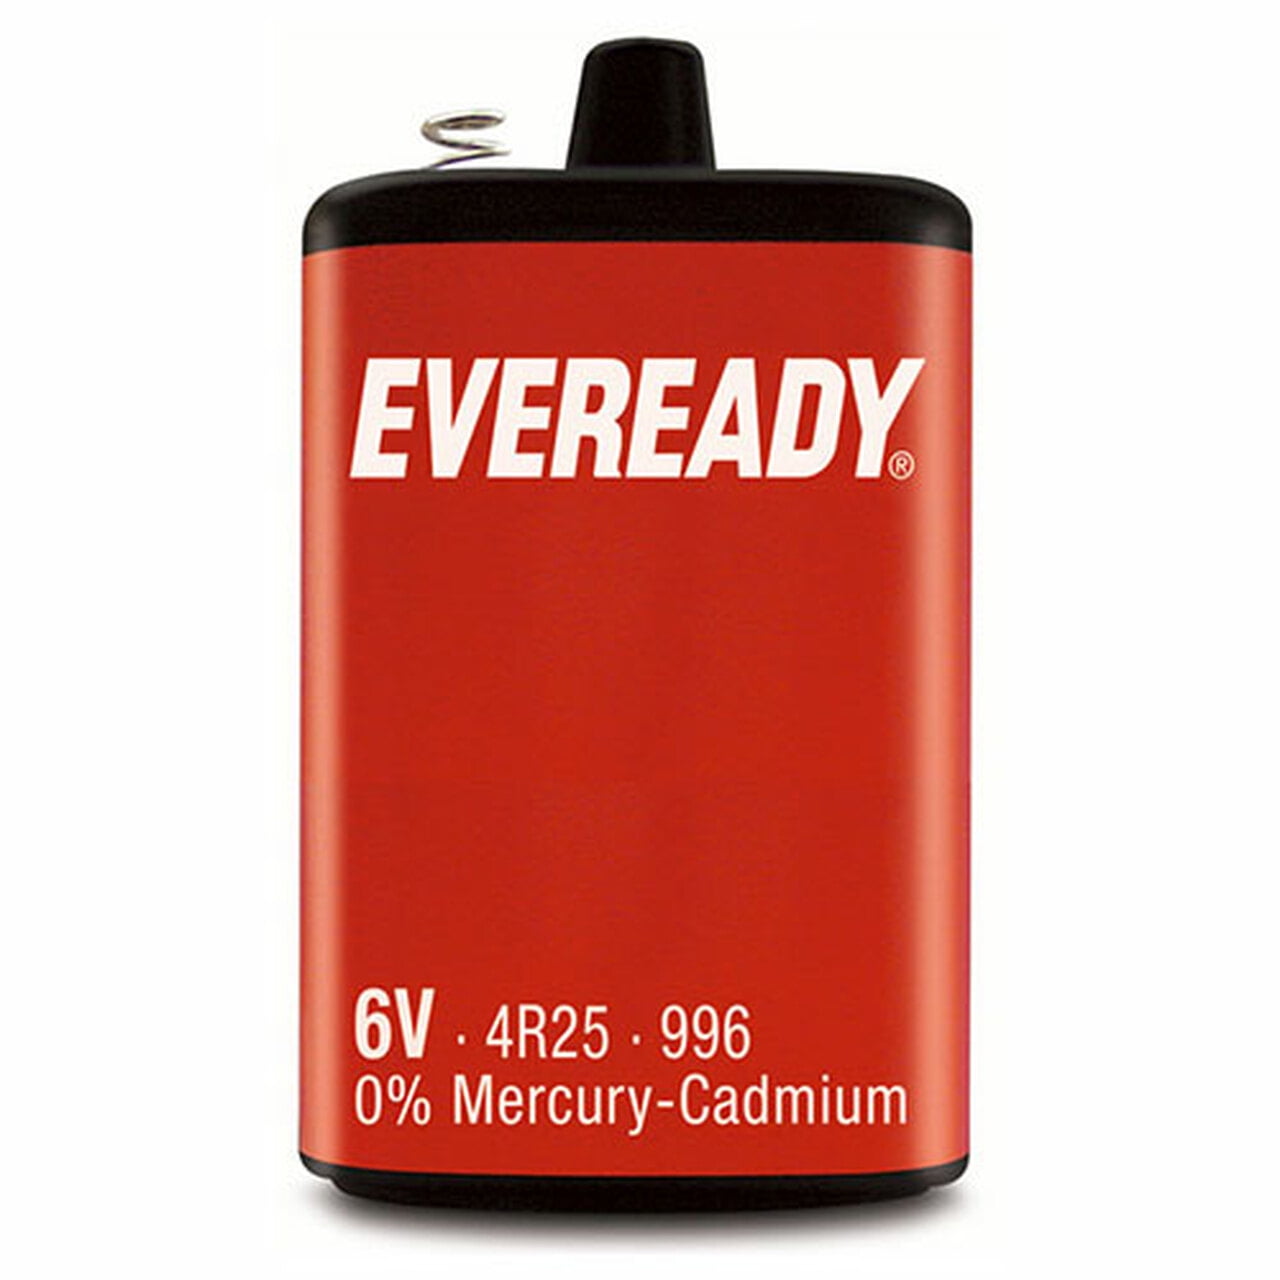 Mark stressende klasse Eveready PJ996 4R25 996 6V Zinc Carbon Lantern Battery Energizer -  Walmart.com